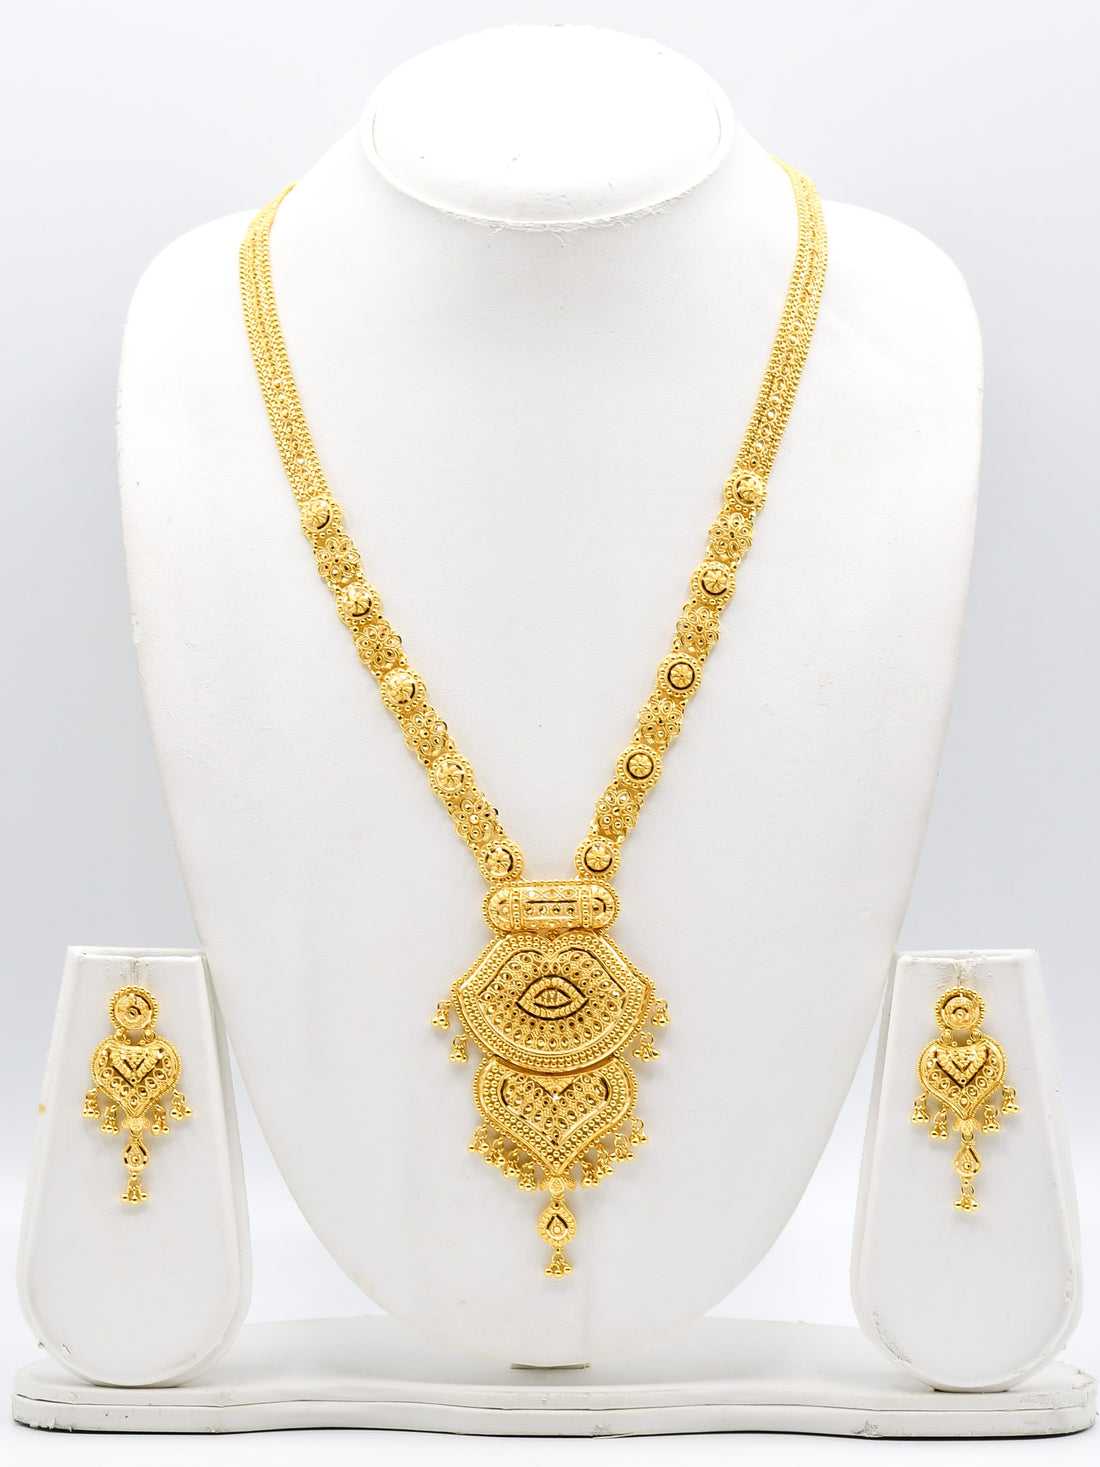 22ct Gold Long Filigree Necklace Set - Roop Darshan